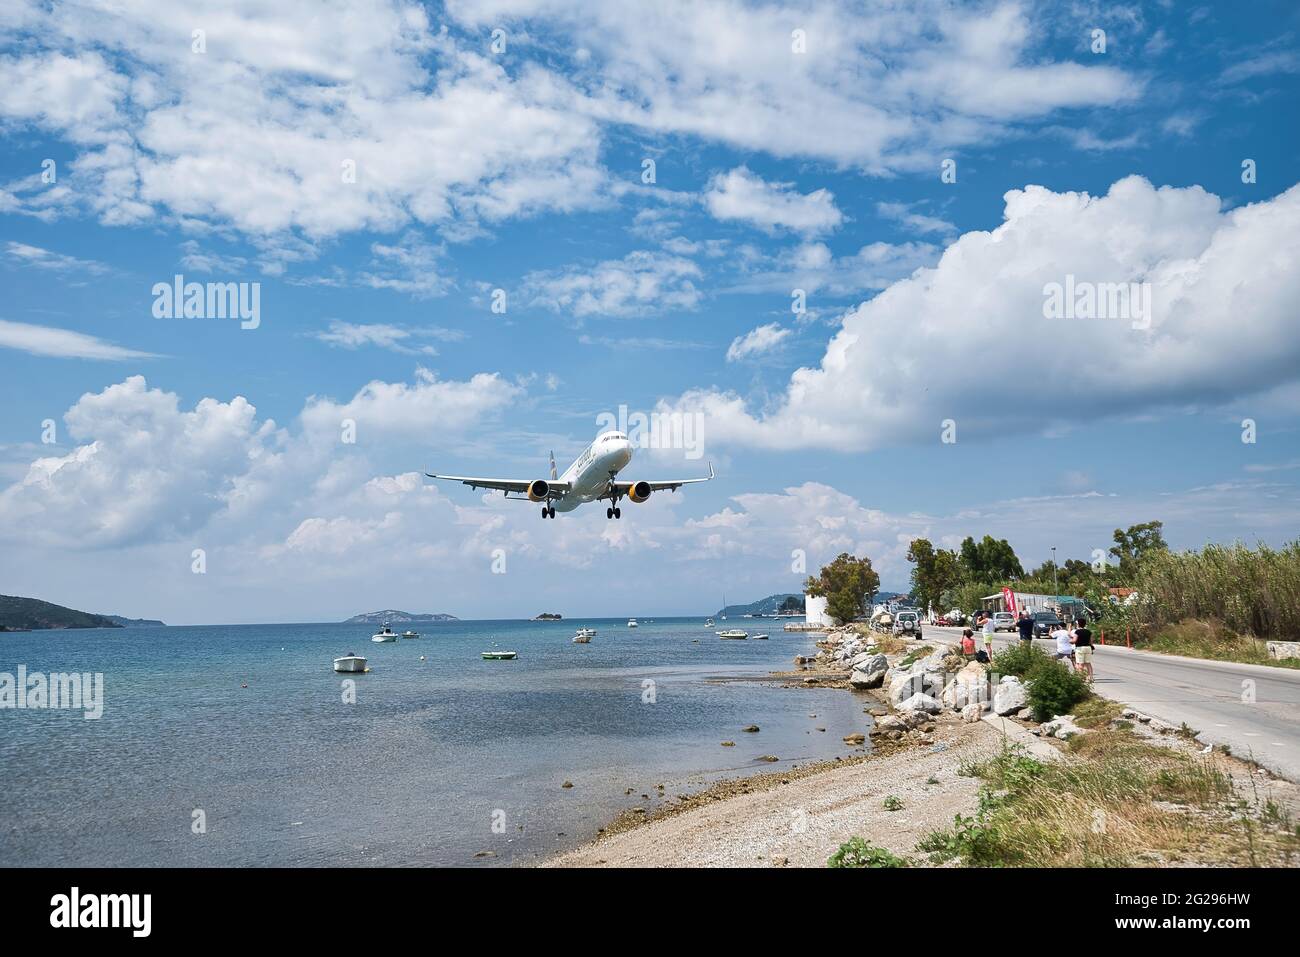 SKIATHOS, GRIECHENLAND - 09. Jun 2021: Condor airbus a321, Landung auf dem Flughafen Skiathos, Tourism 2021, COVID-frei. Skiathos, Griechenland, 6-9-2021 Stockfoto